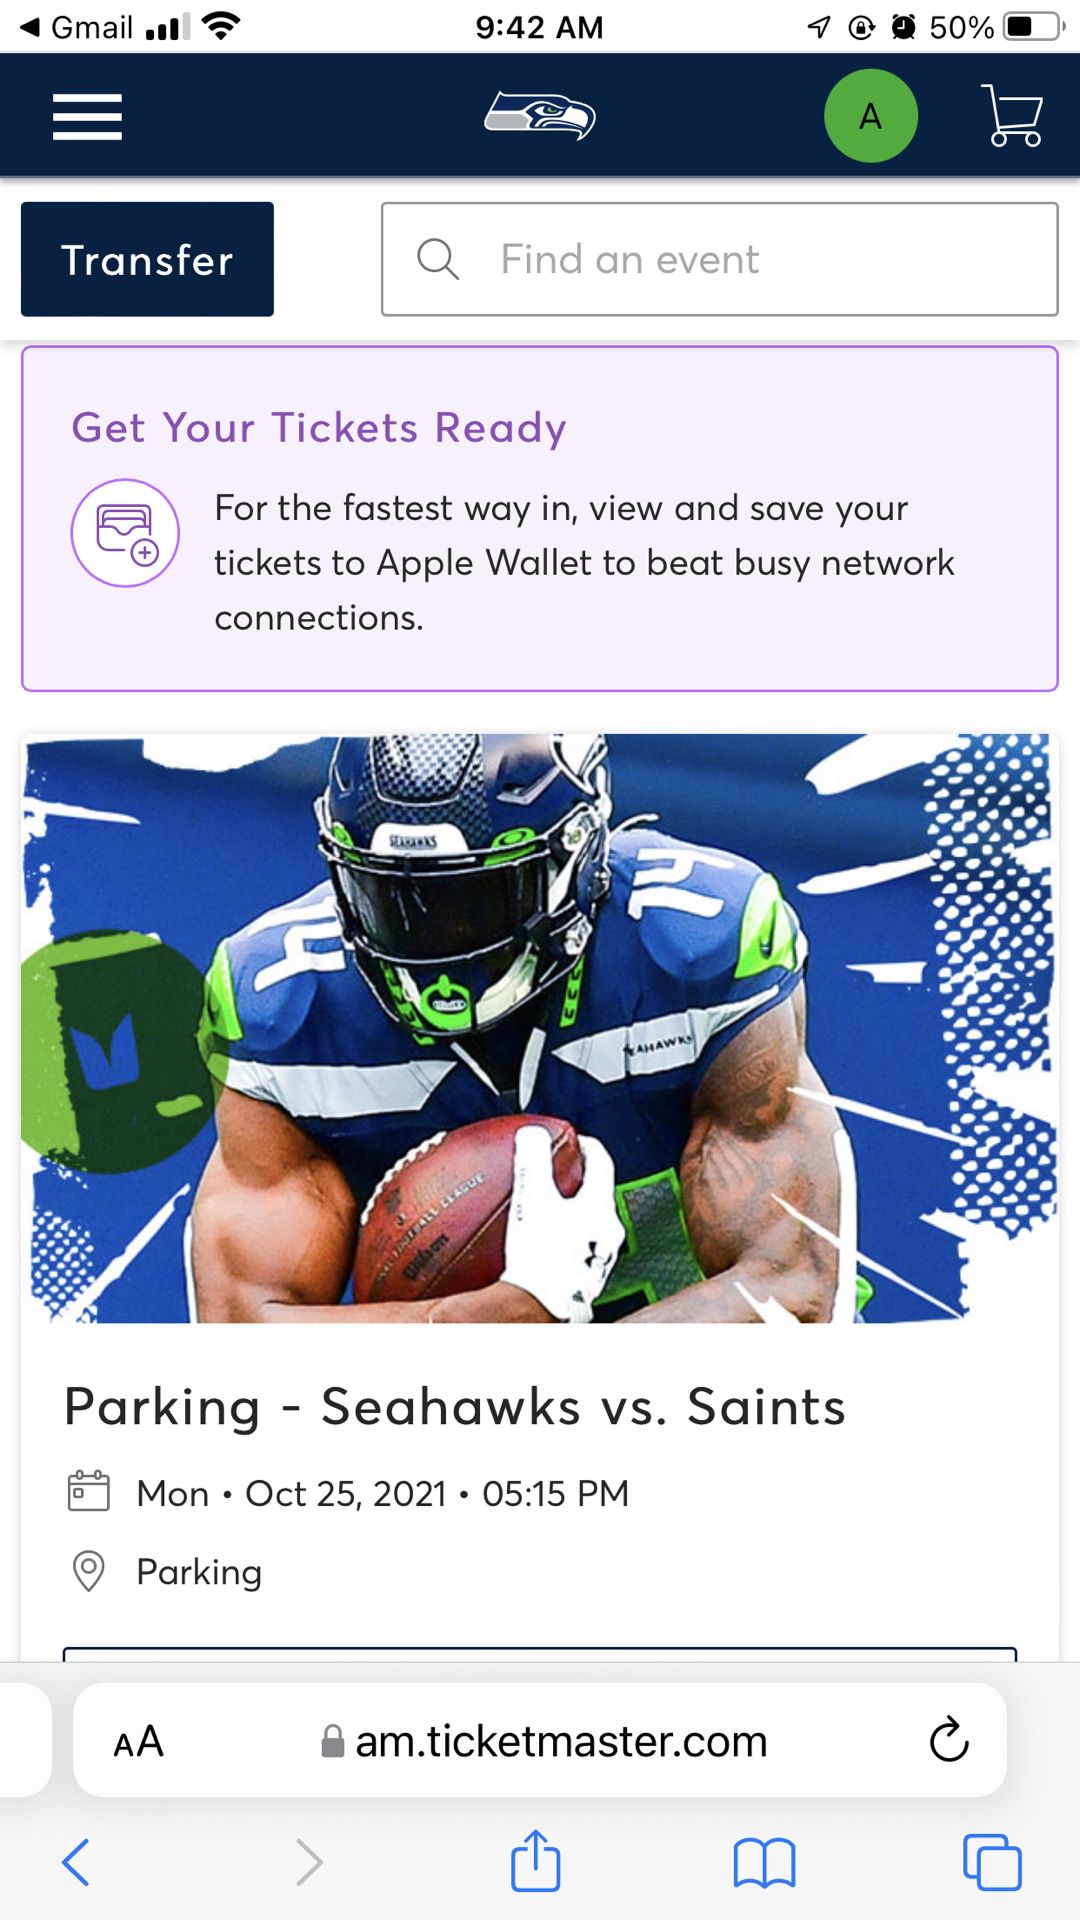 Seahawks VS Saints Parking - Closest Garage To Stadium